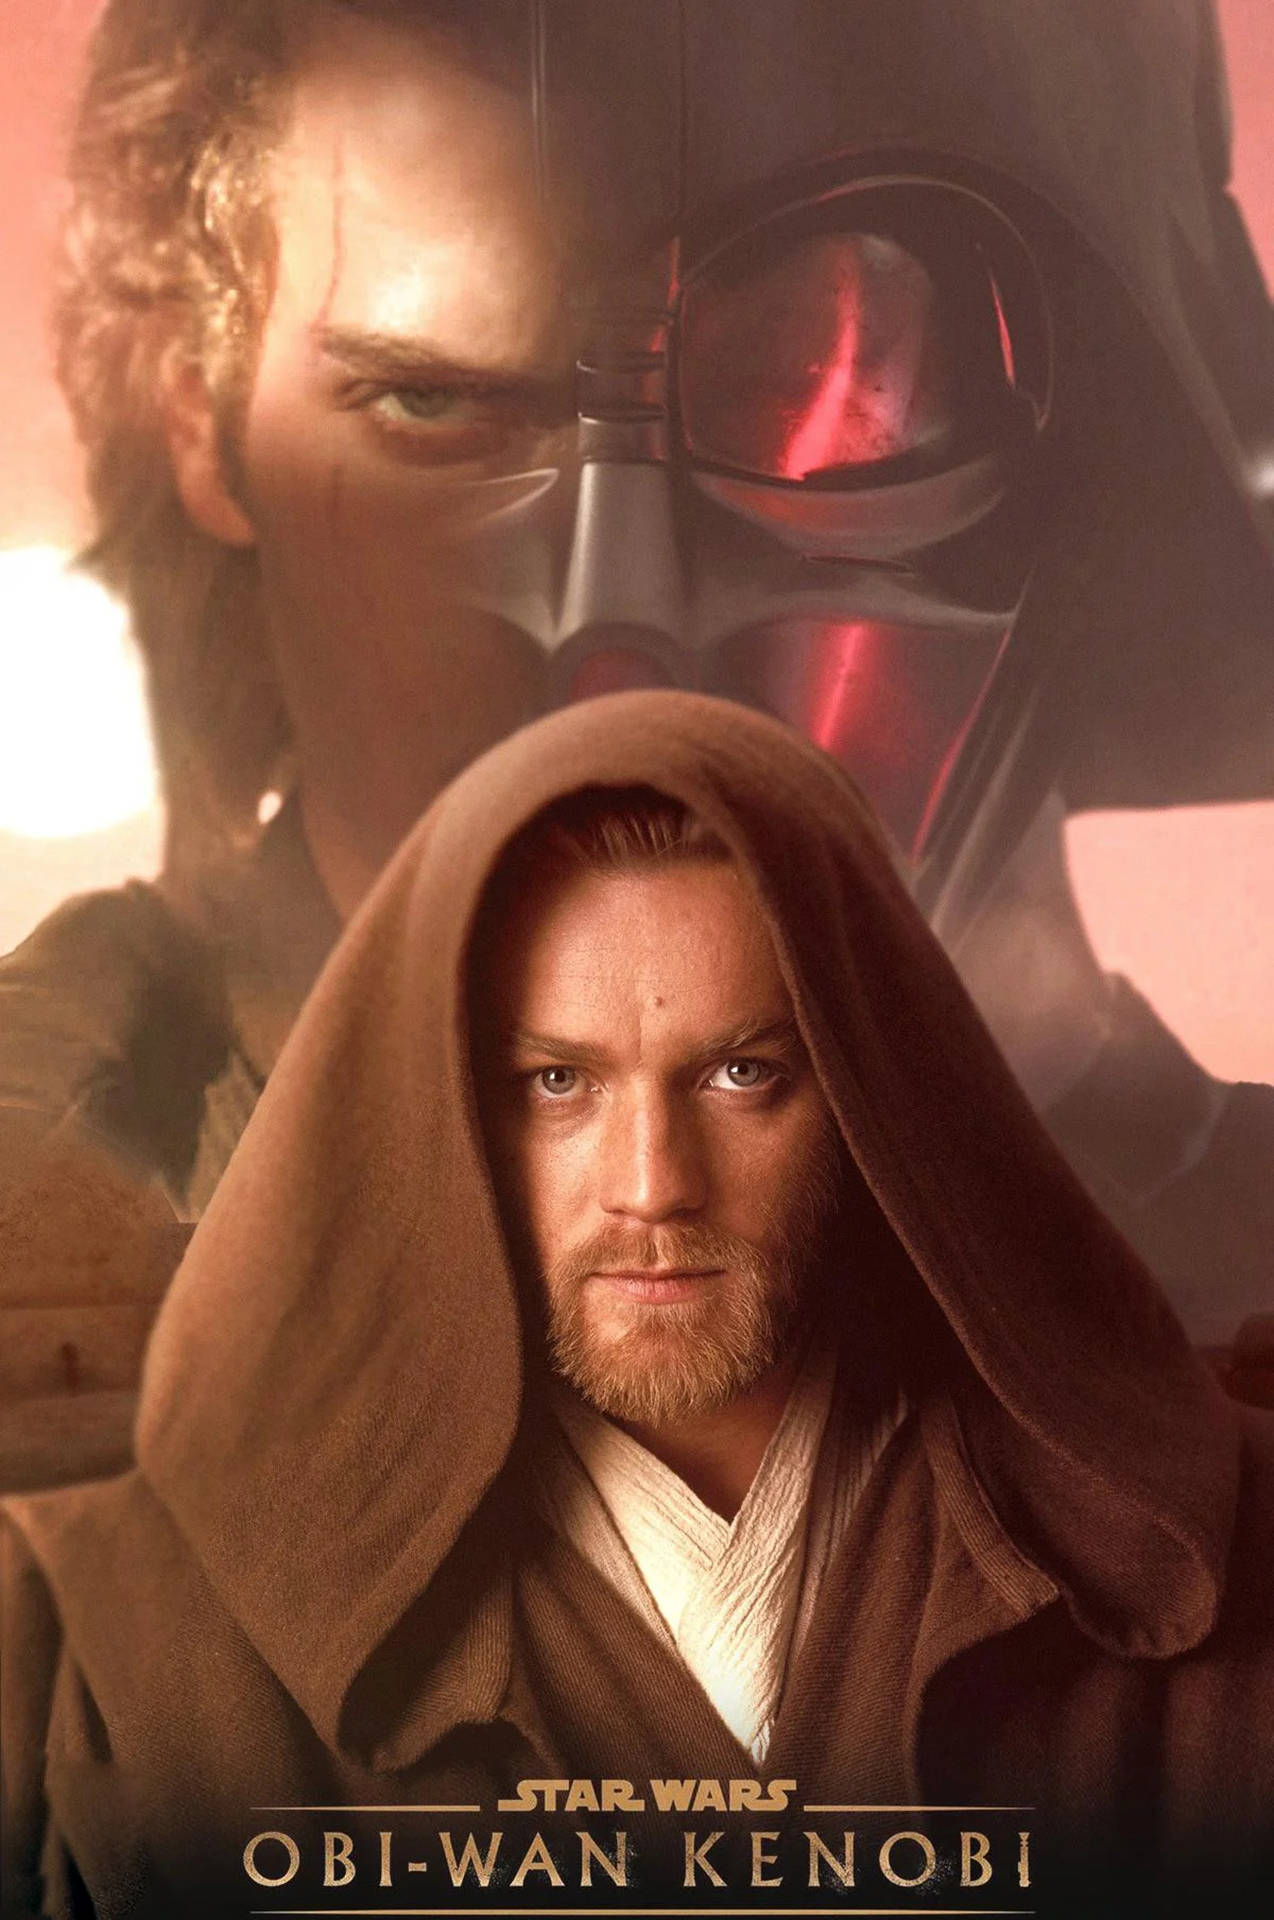 Obi Wan Kenobi And Anakin Sywalker Background